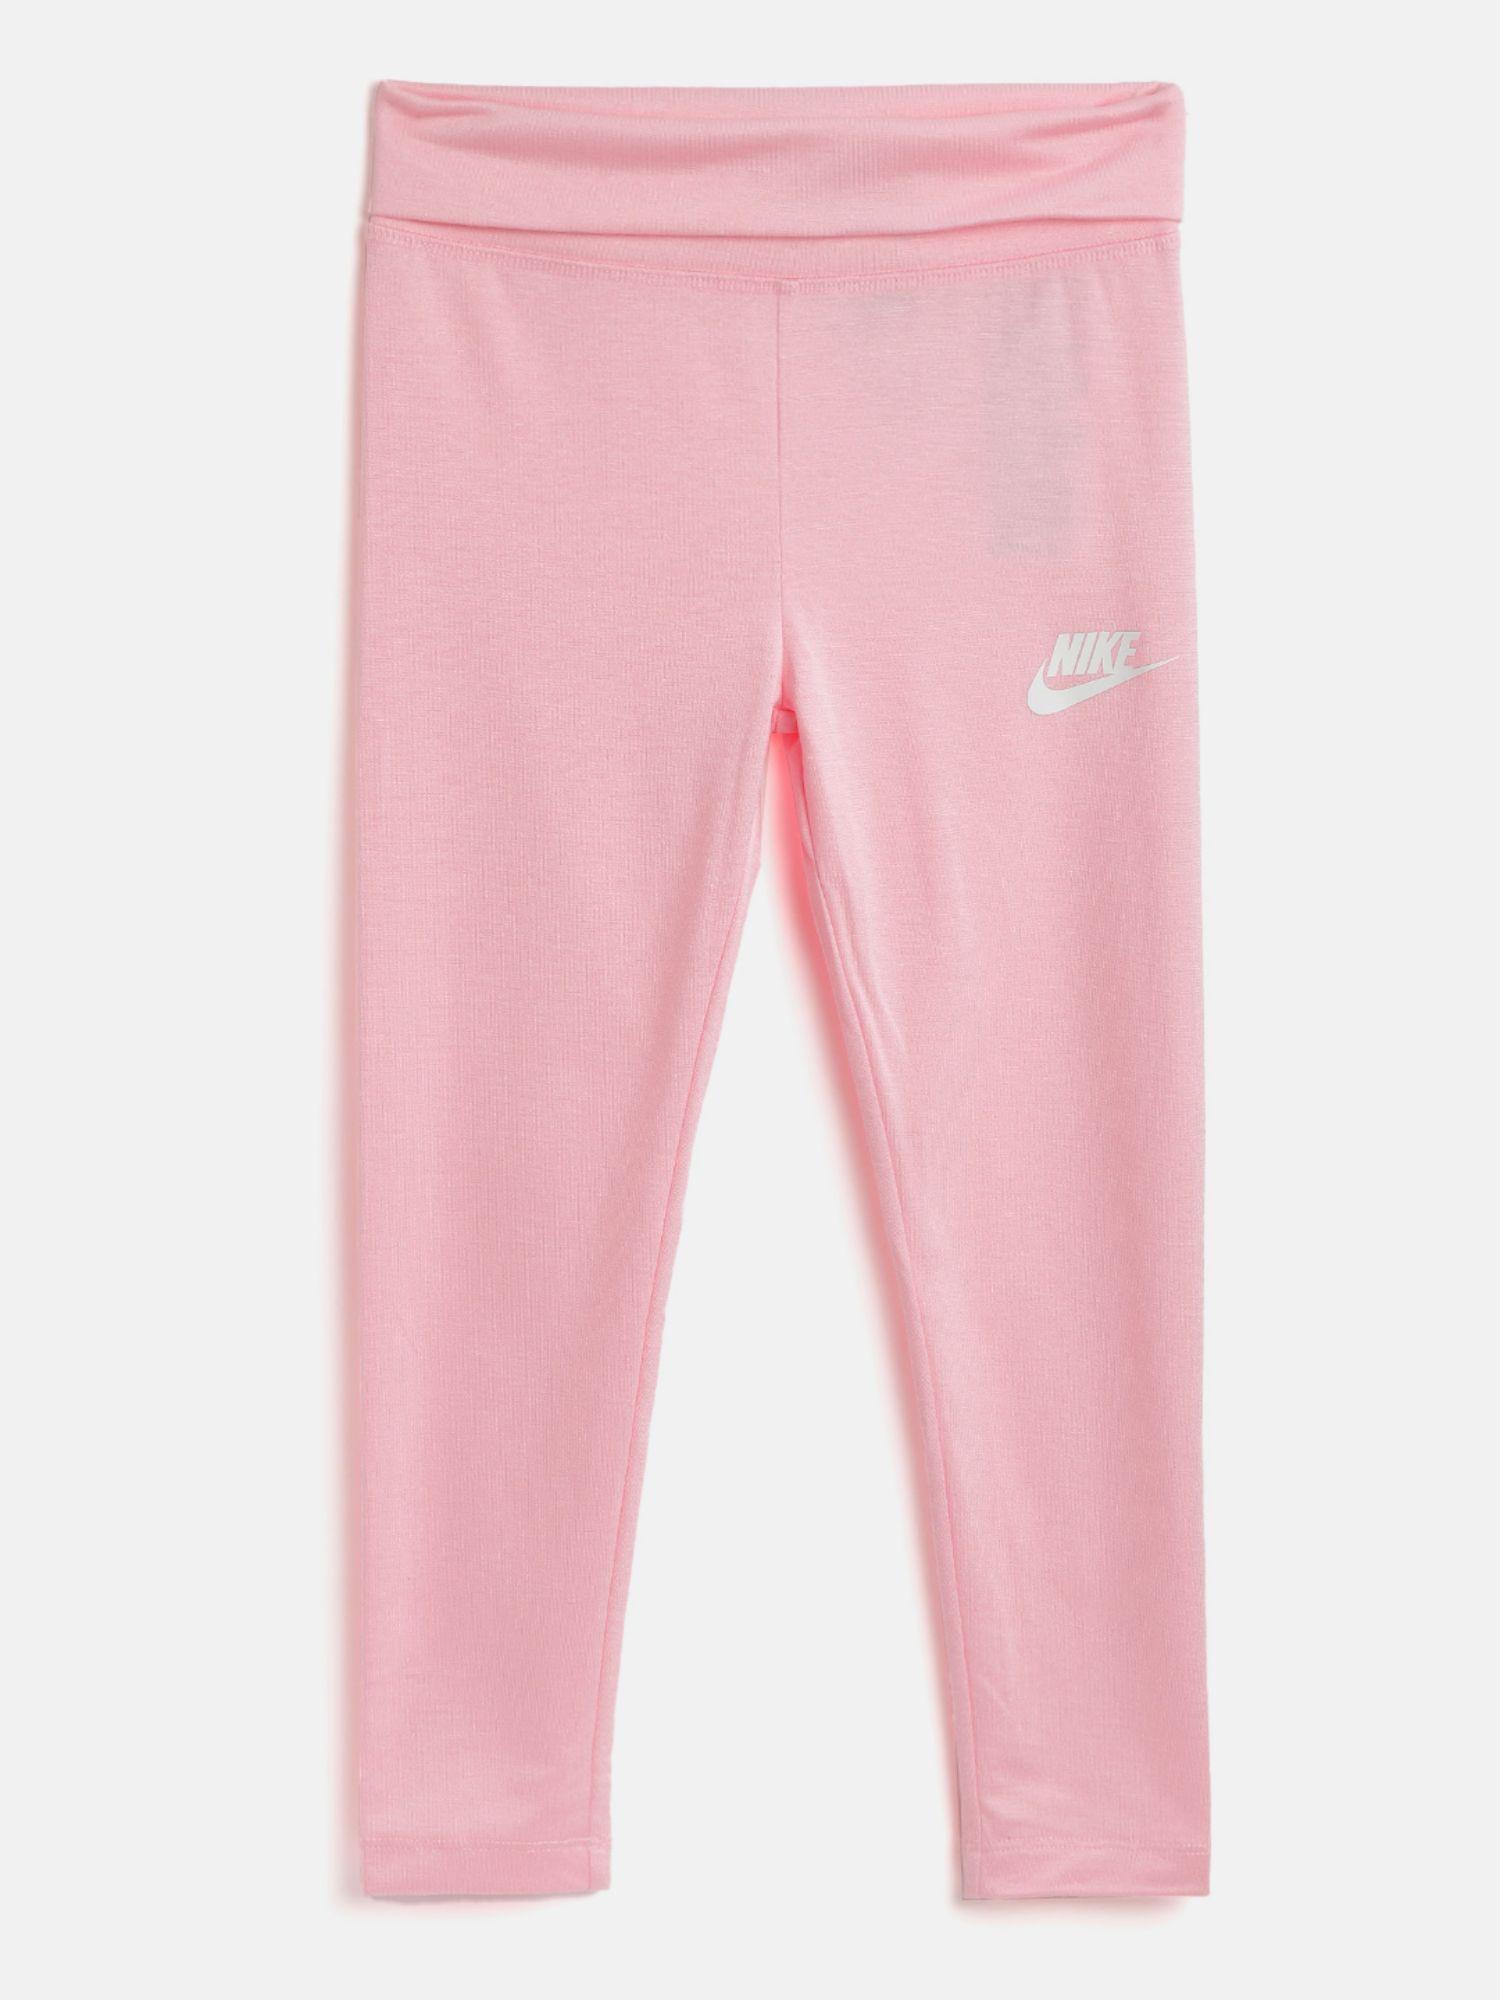 girls-pink-solid-plain-leggings